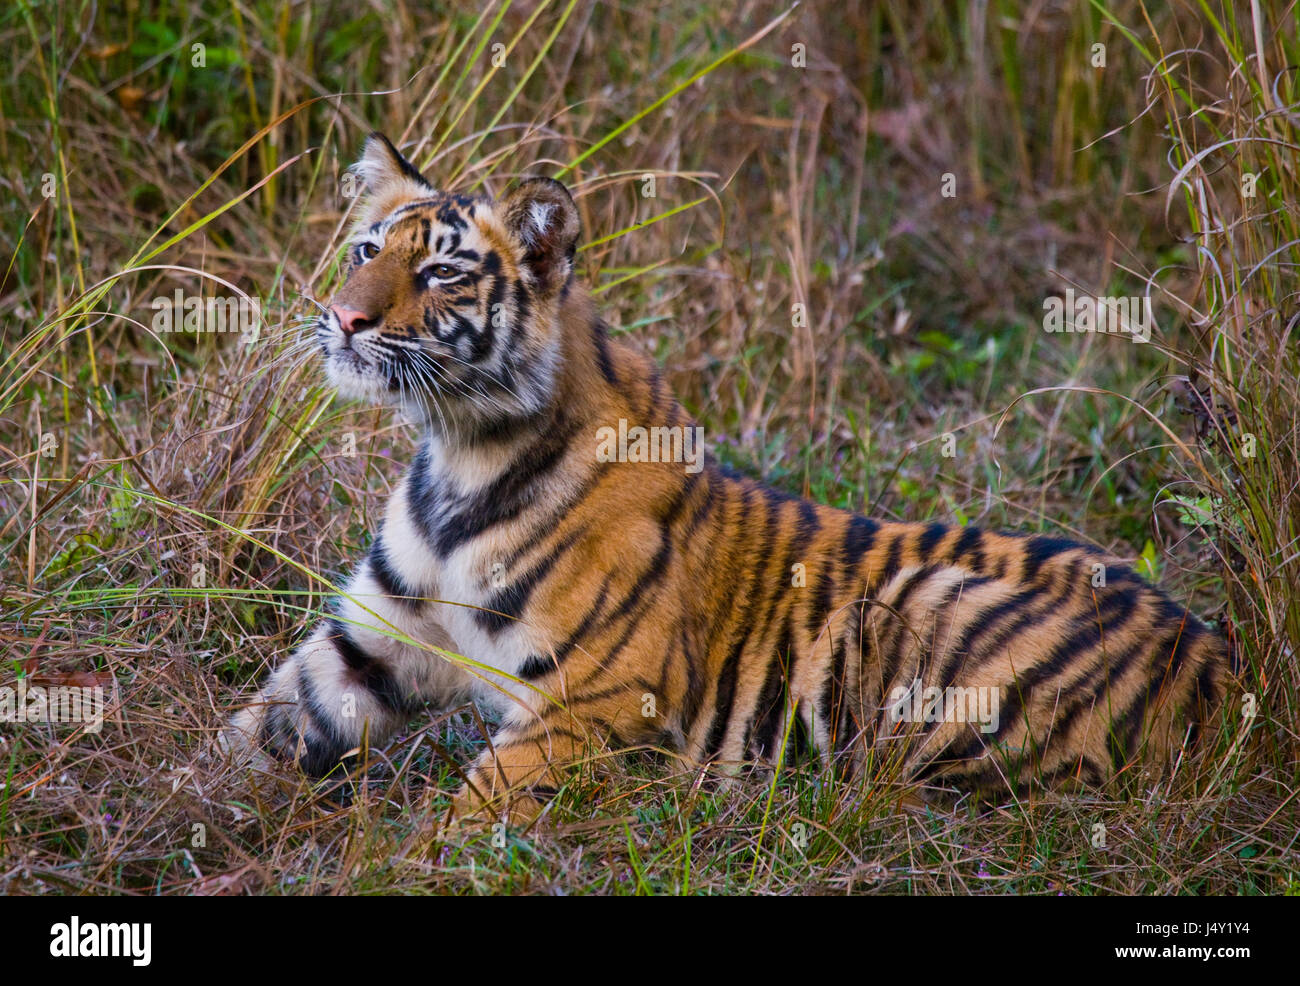 The cub wild tiger lying on the grass. India. Bandhavgarh National Park. Madhya Pradesh. Stock Photo